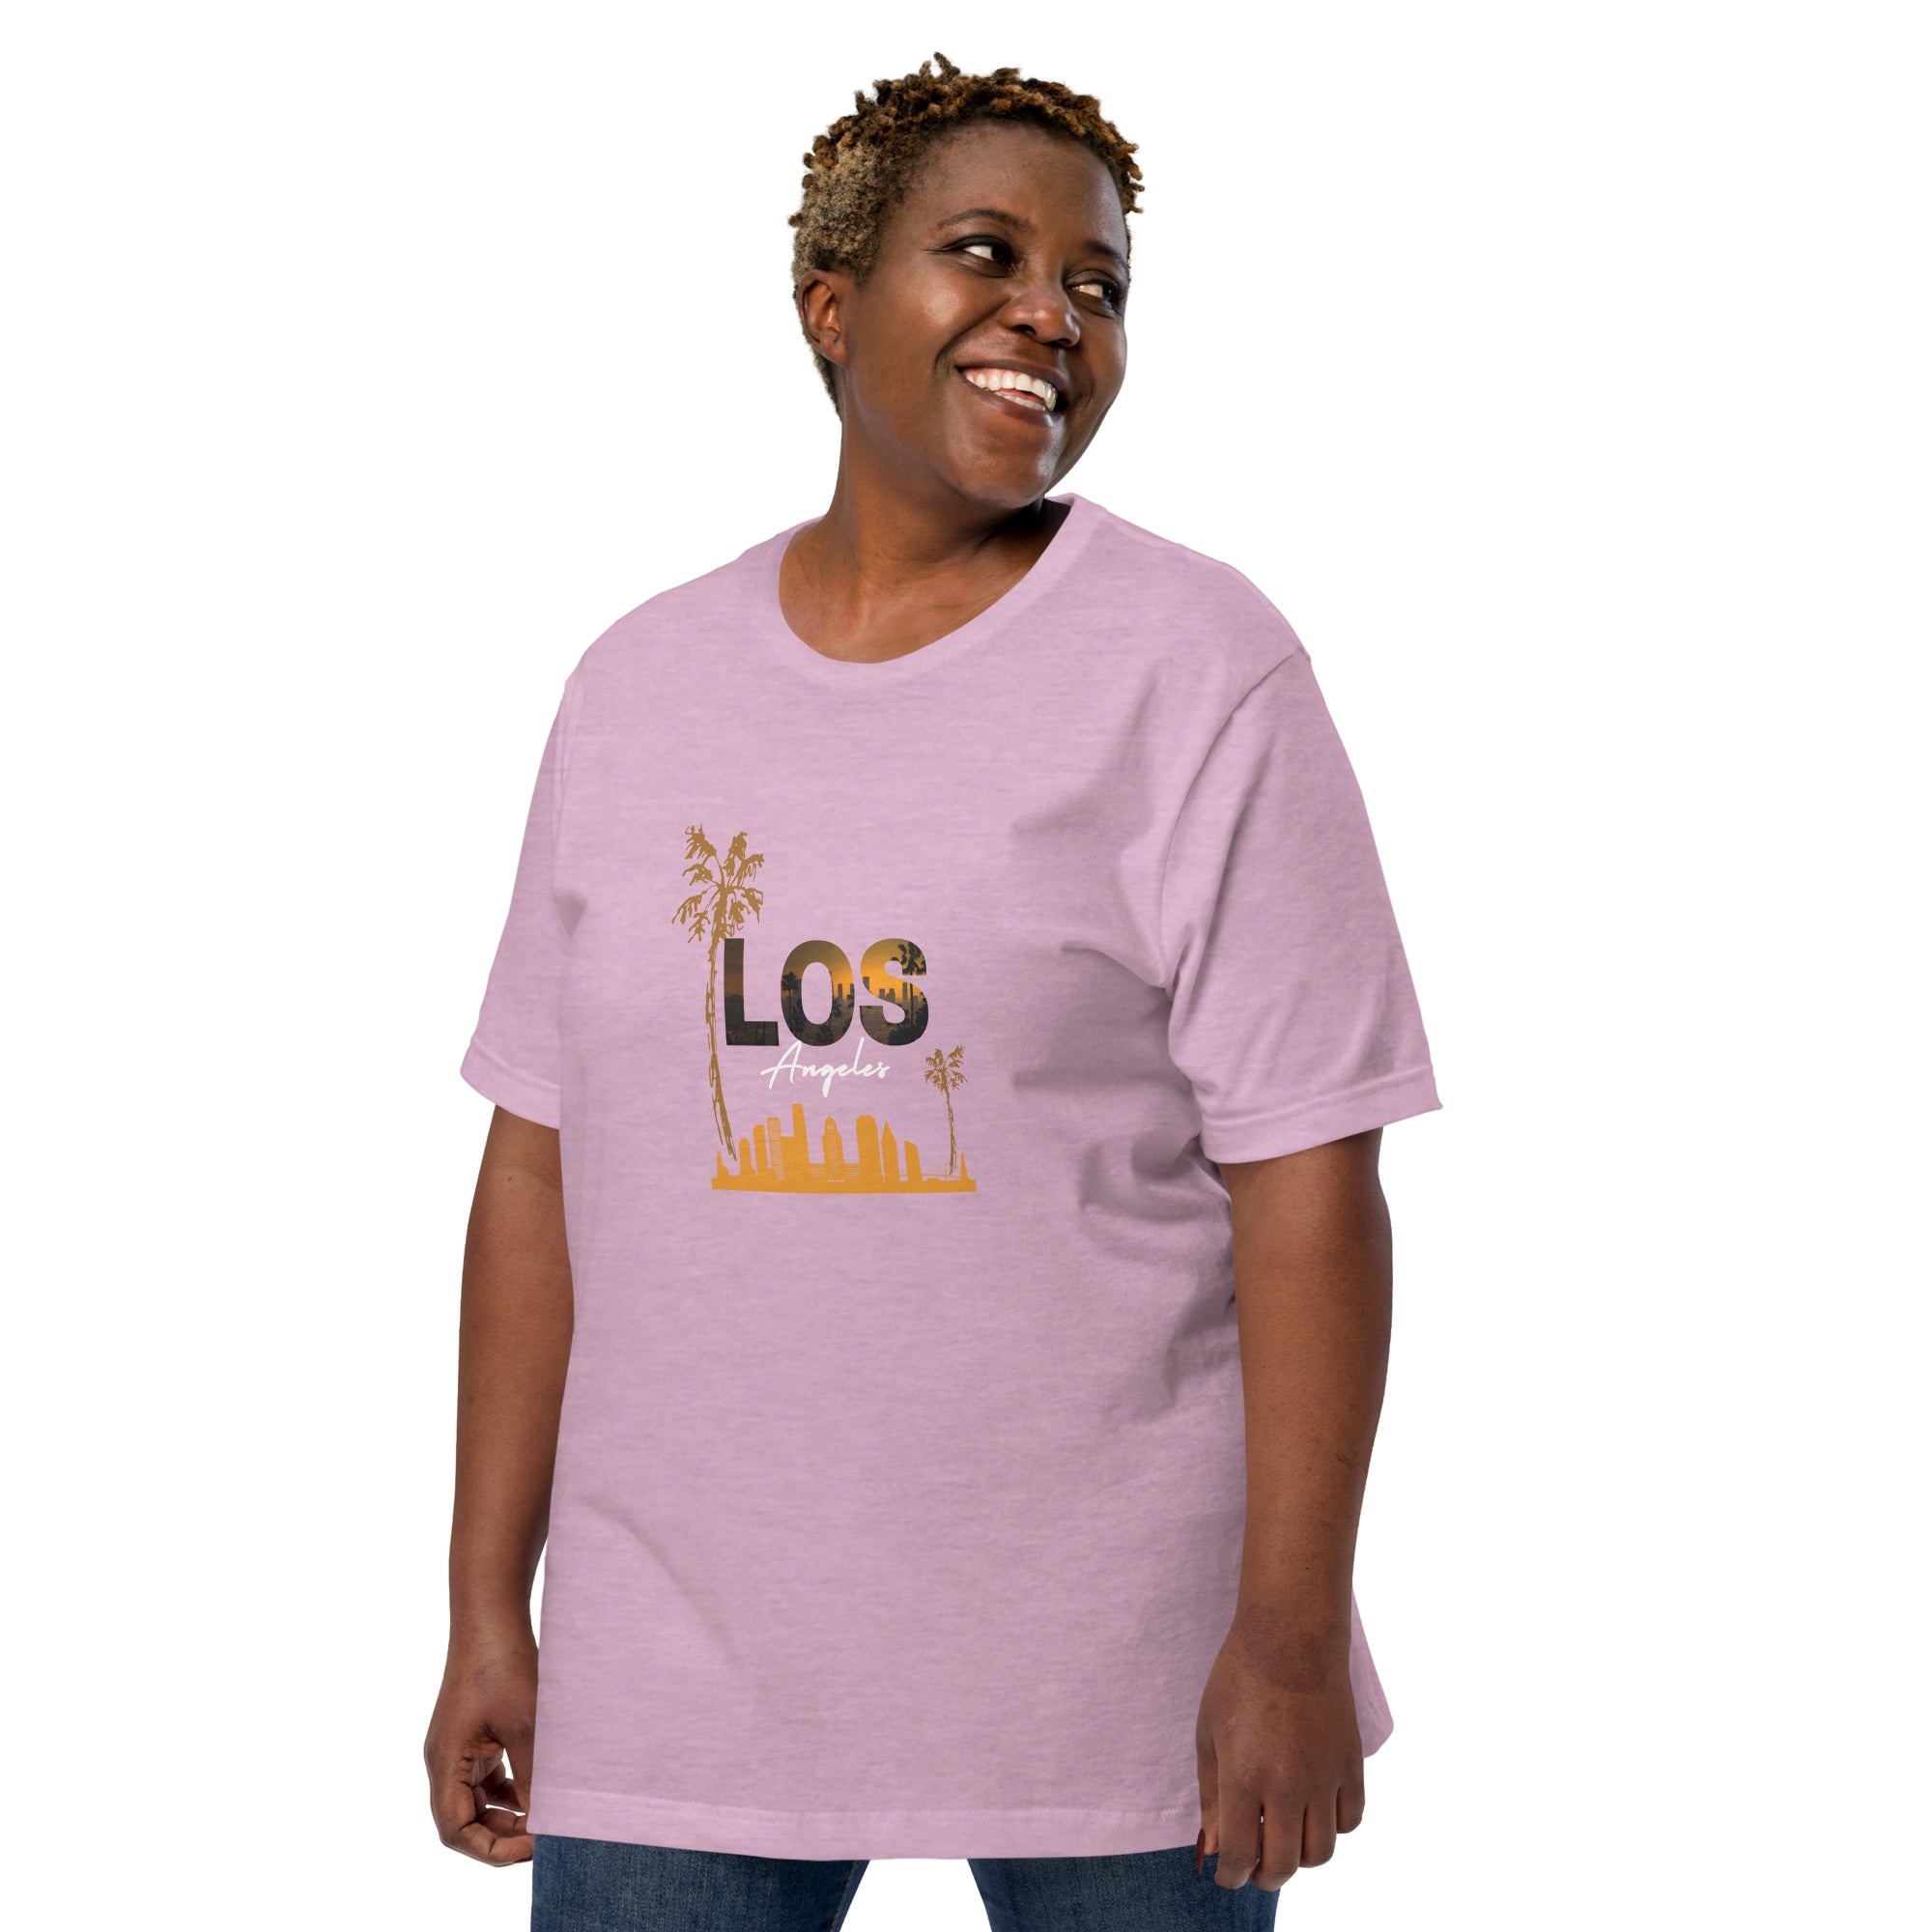 Los Angeles - Unisex t-shirt